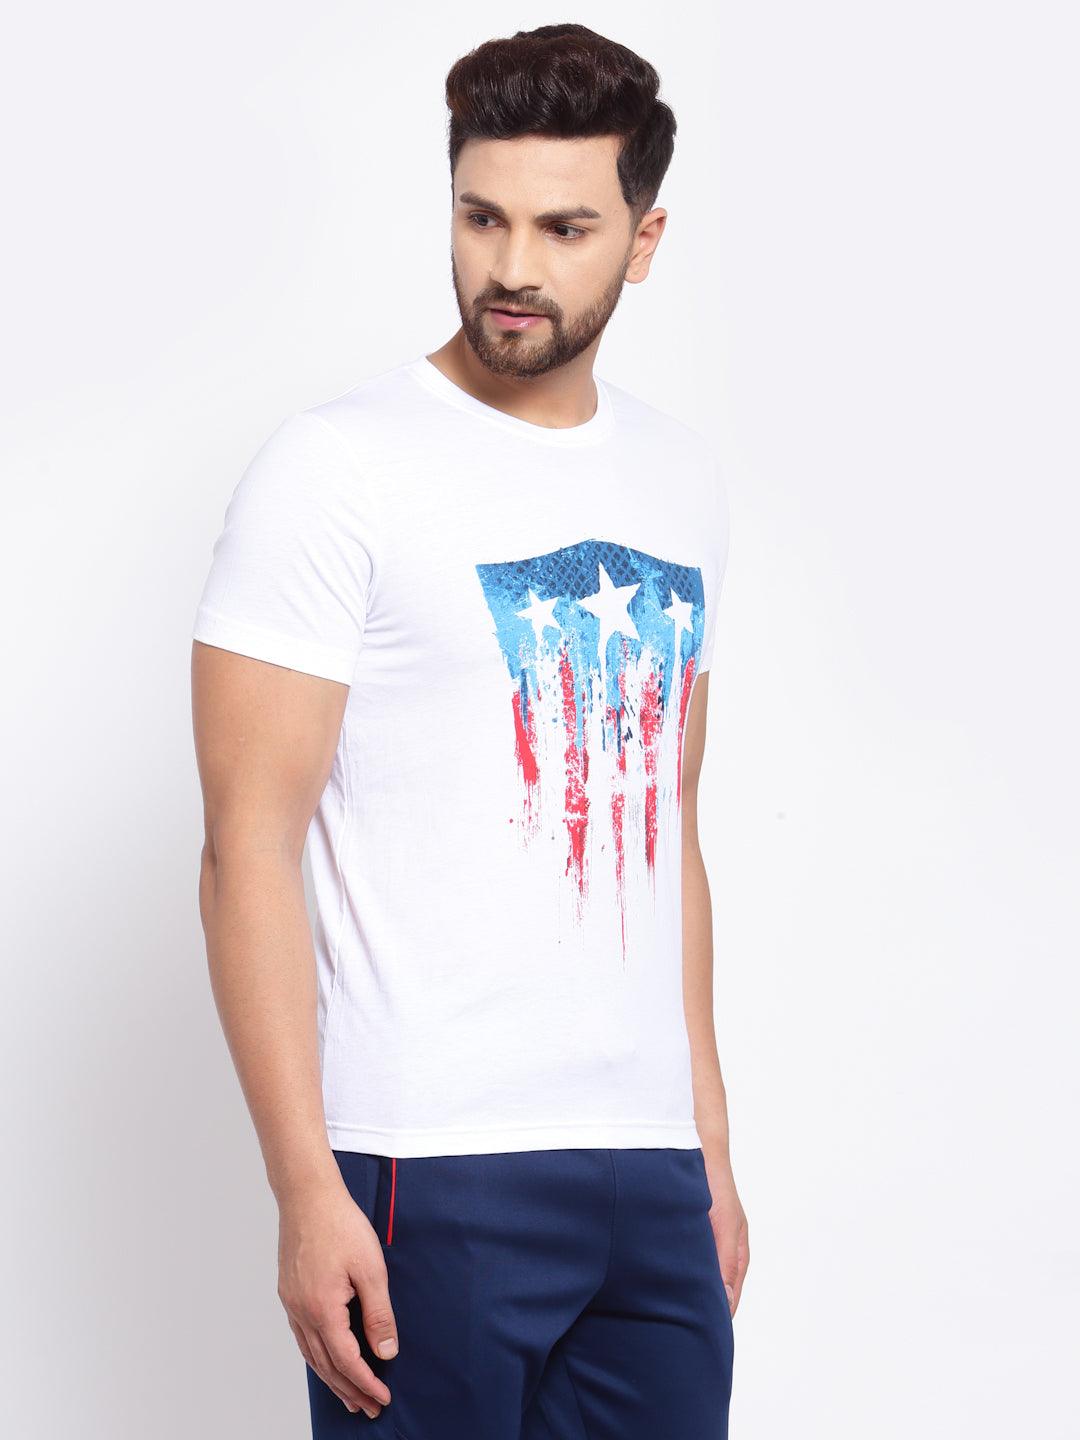 Sporto Men's Captain America Shield Printed Half Sleeve T-Shirt - White